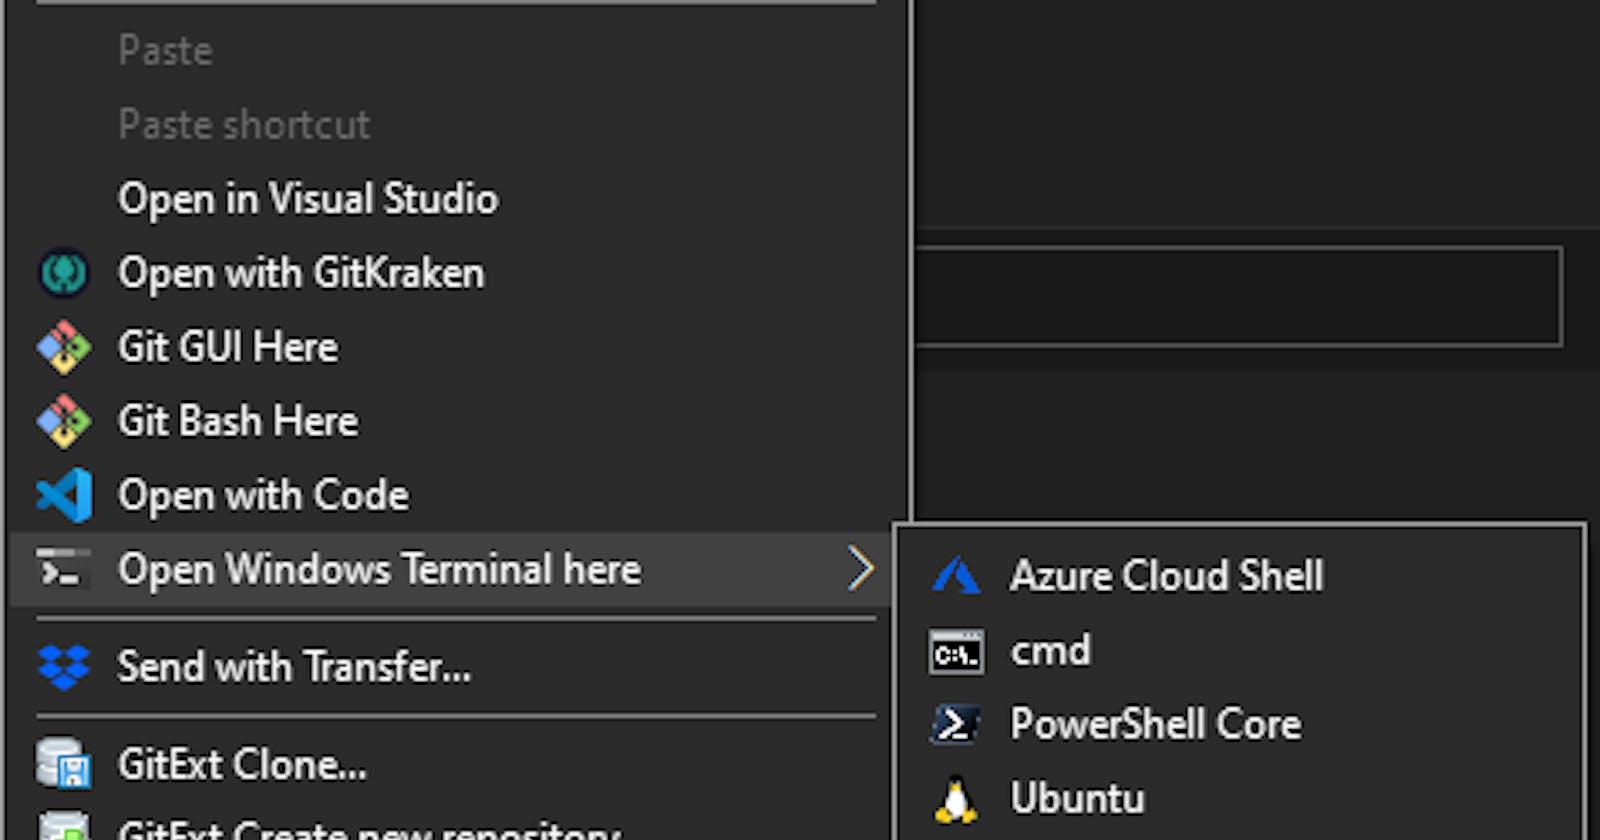 Adding "Open Windows Terminal here" to the explorer context menu